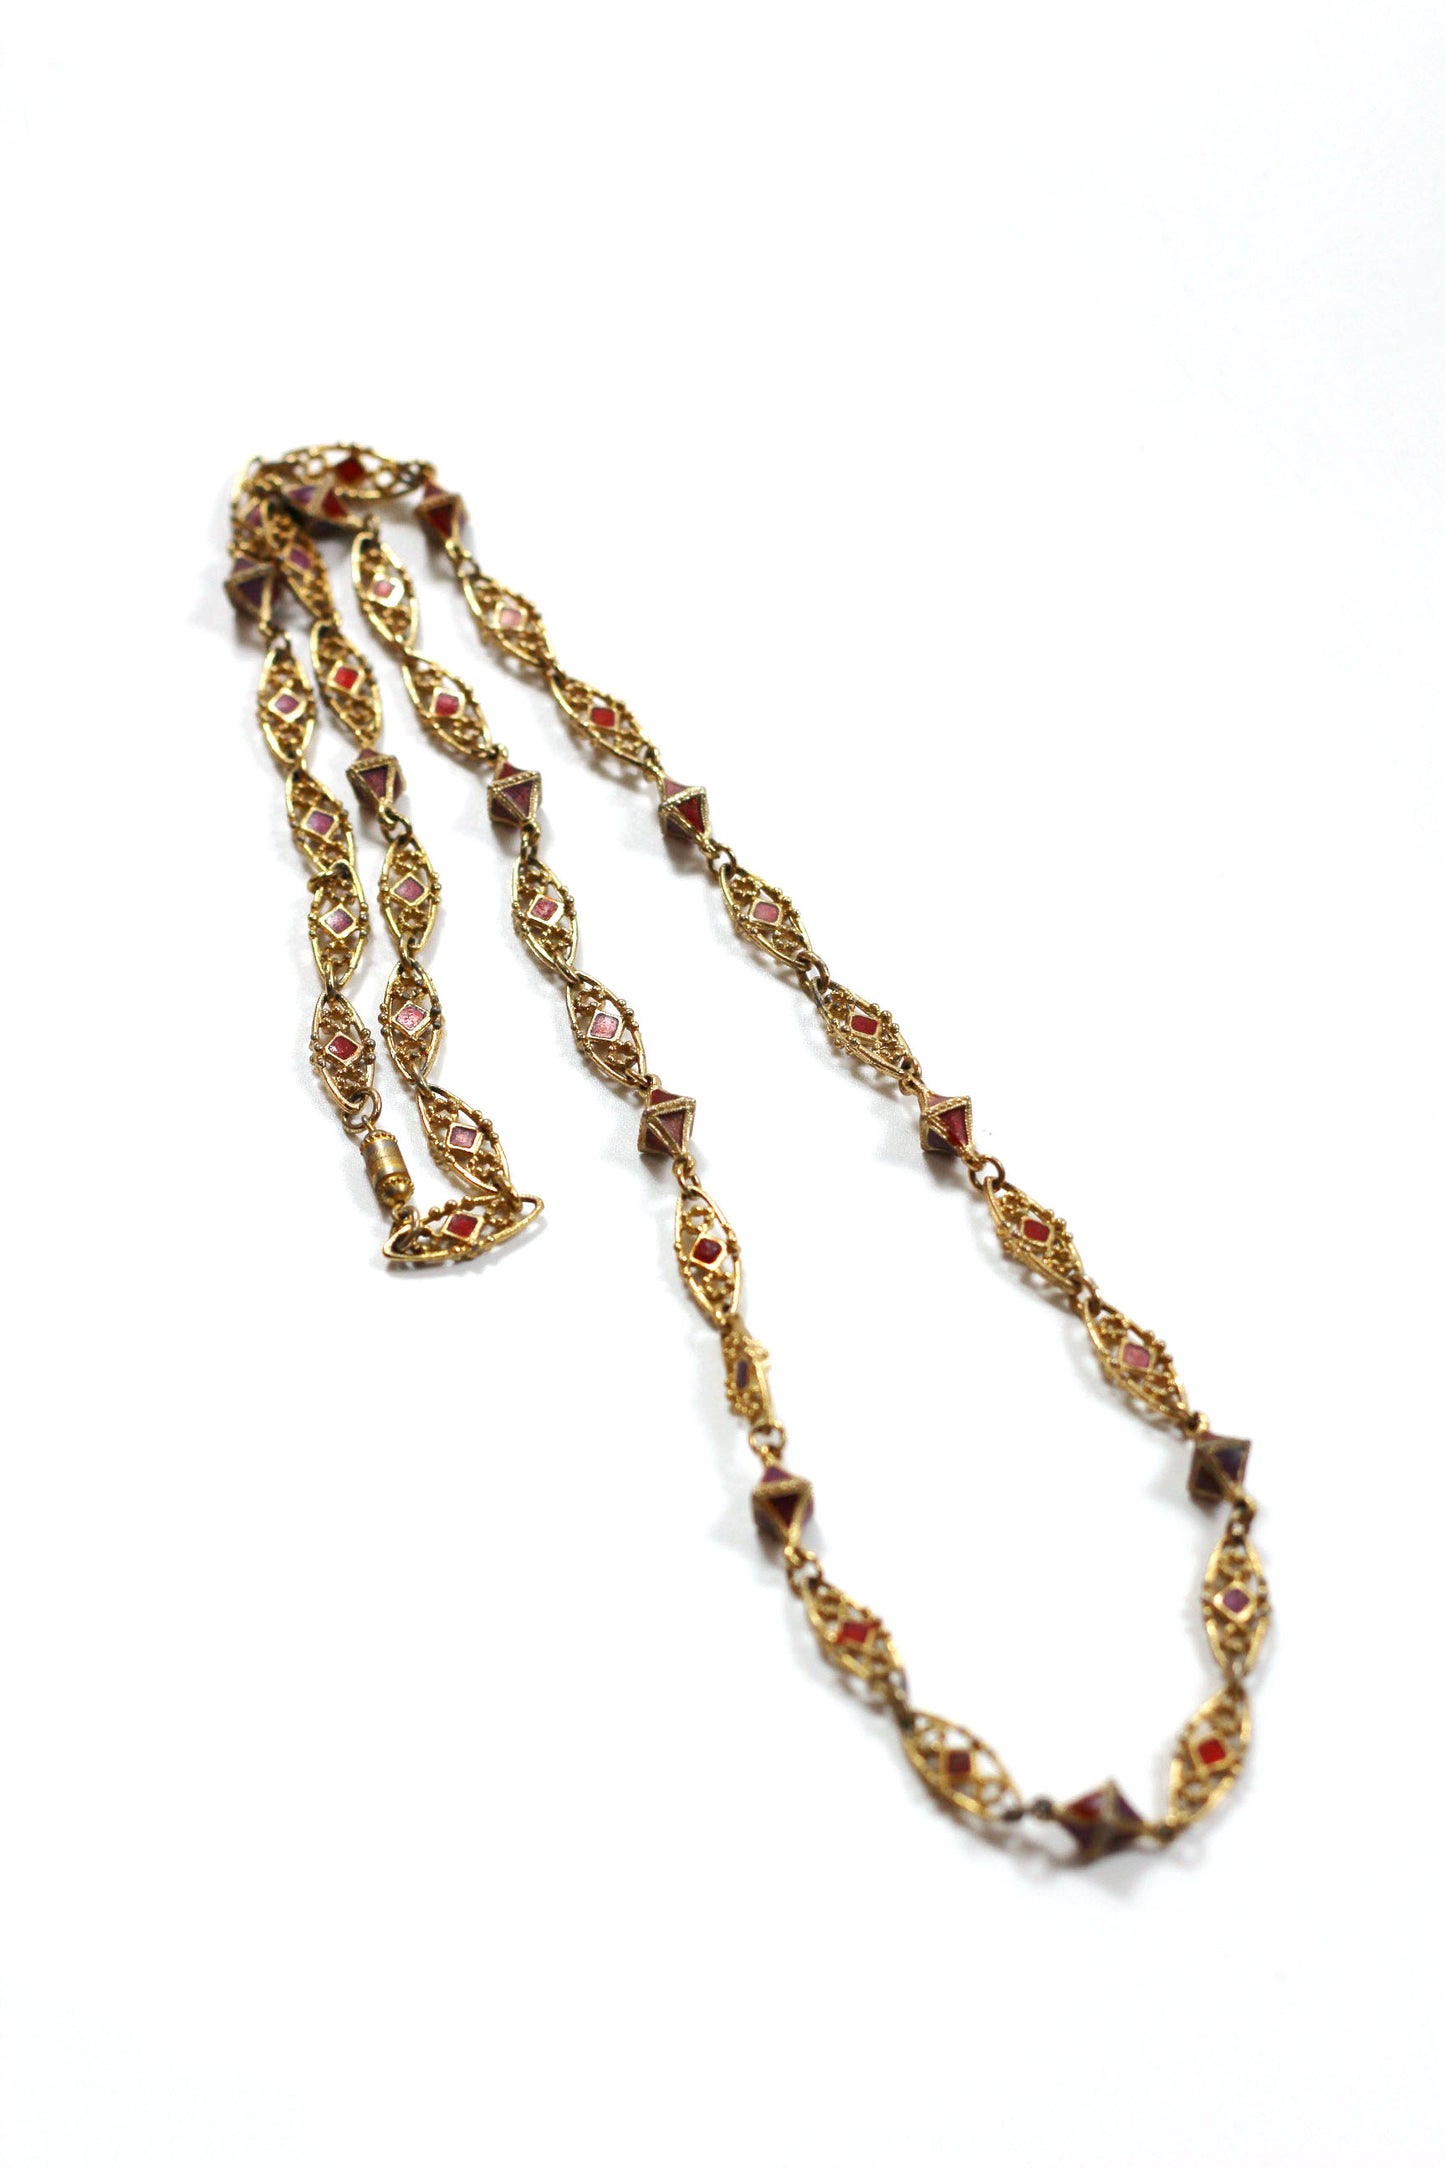 Vintage gold necklace エキゾチックな魅力が漂う